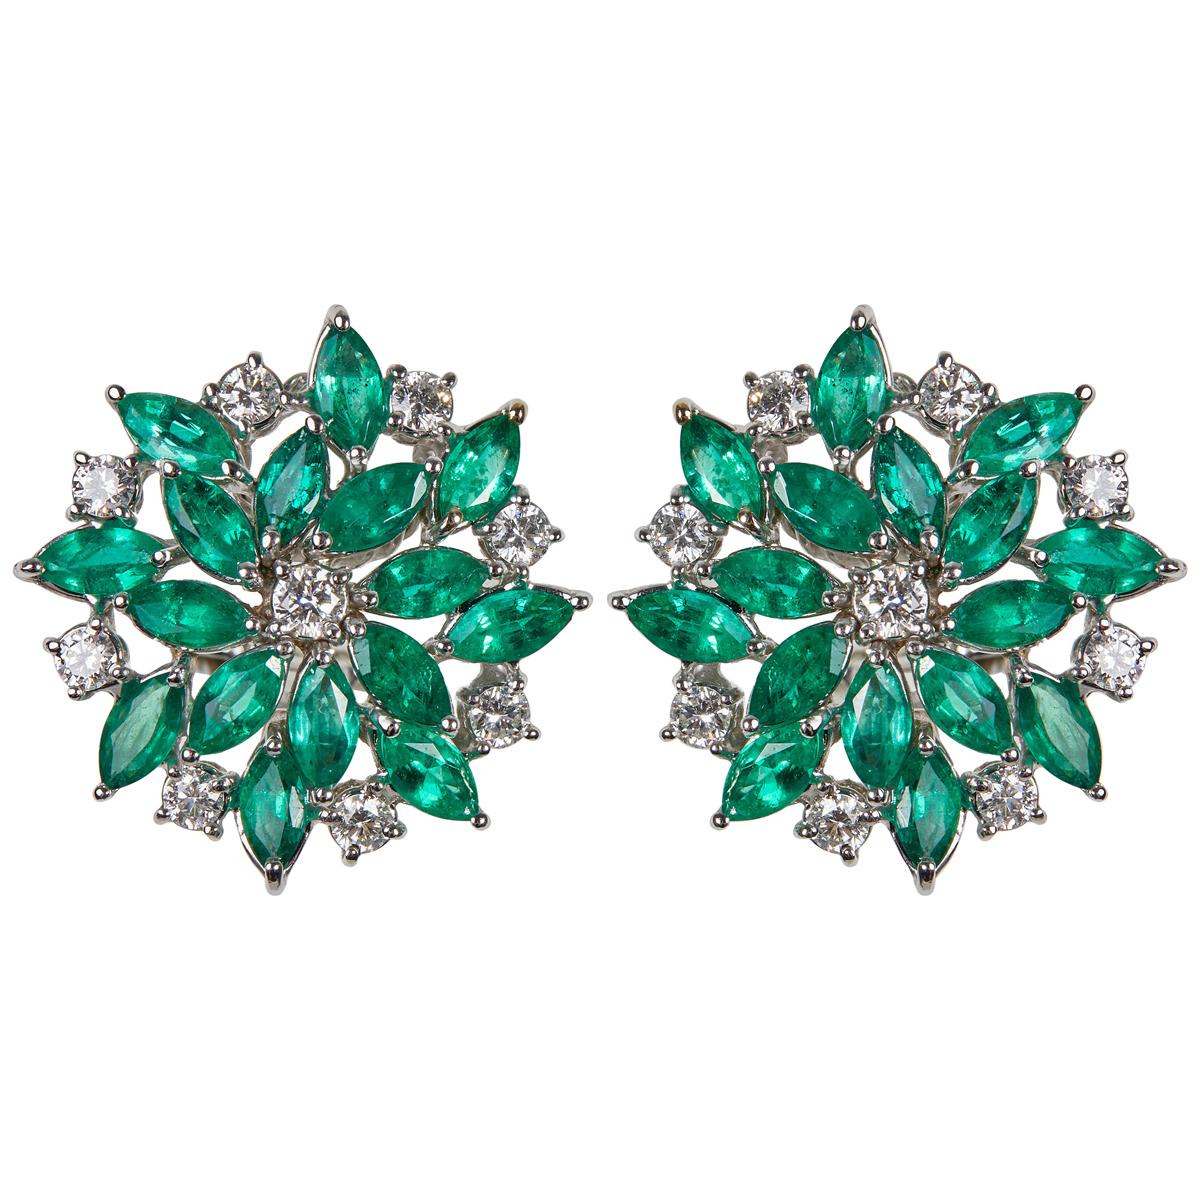 18 Karat White Gold Diamond and Emerald Stud Earrings